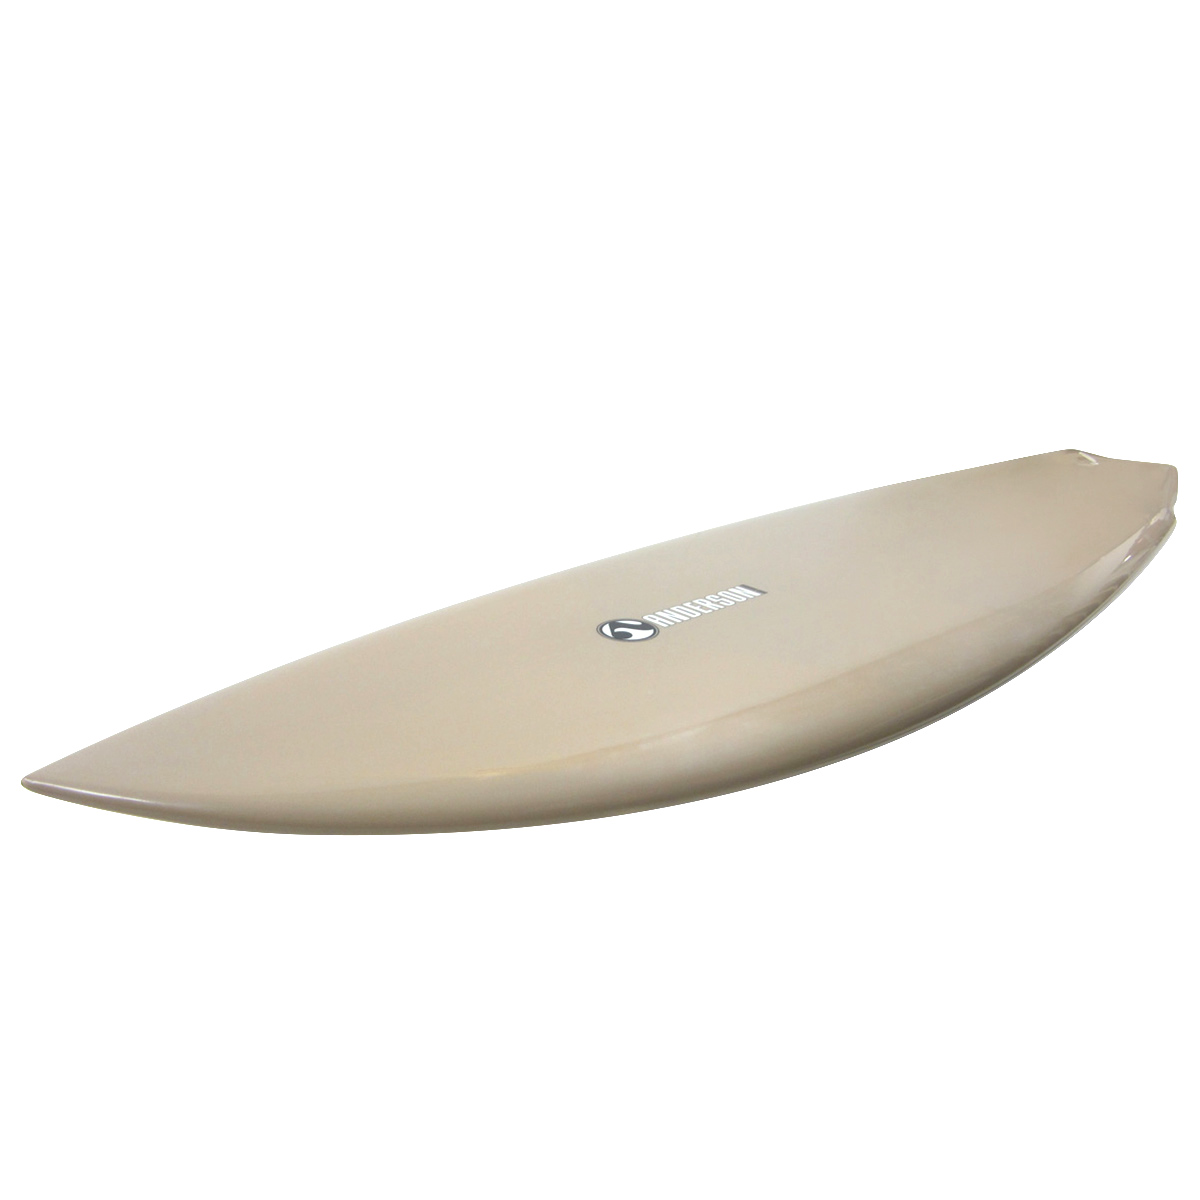 Anderson Surfboards / 6' 0 STINGER